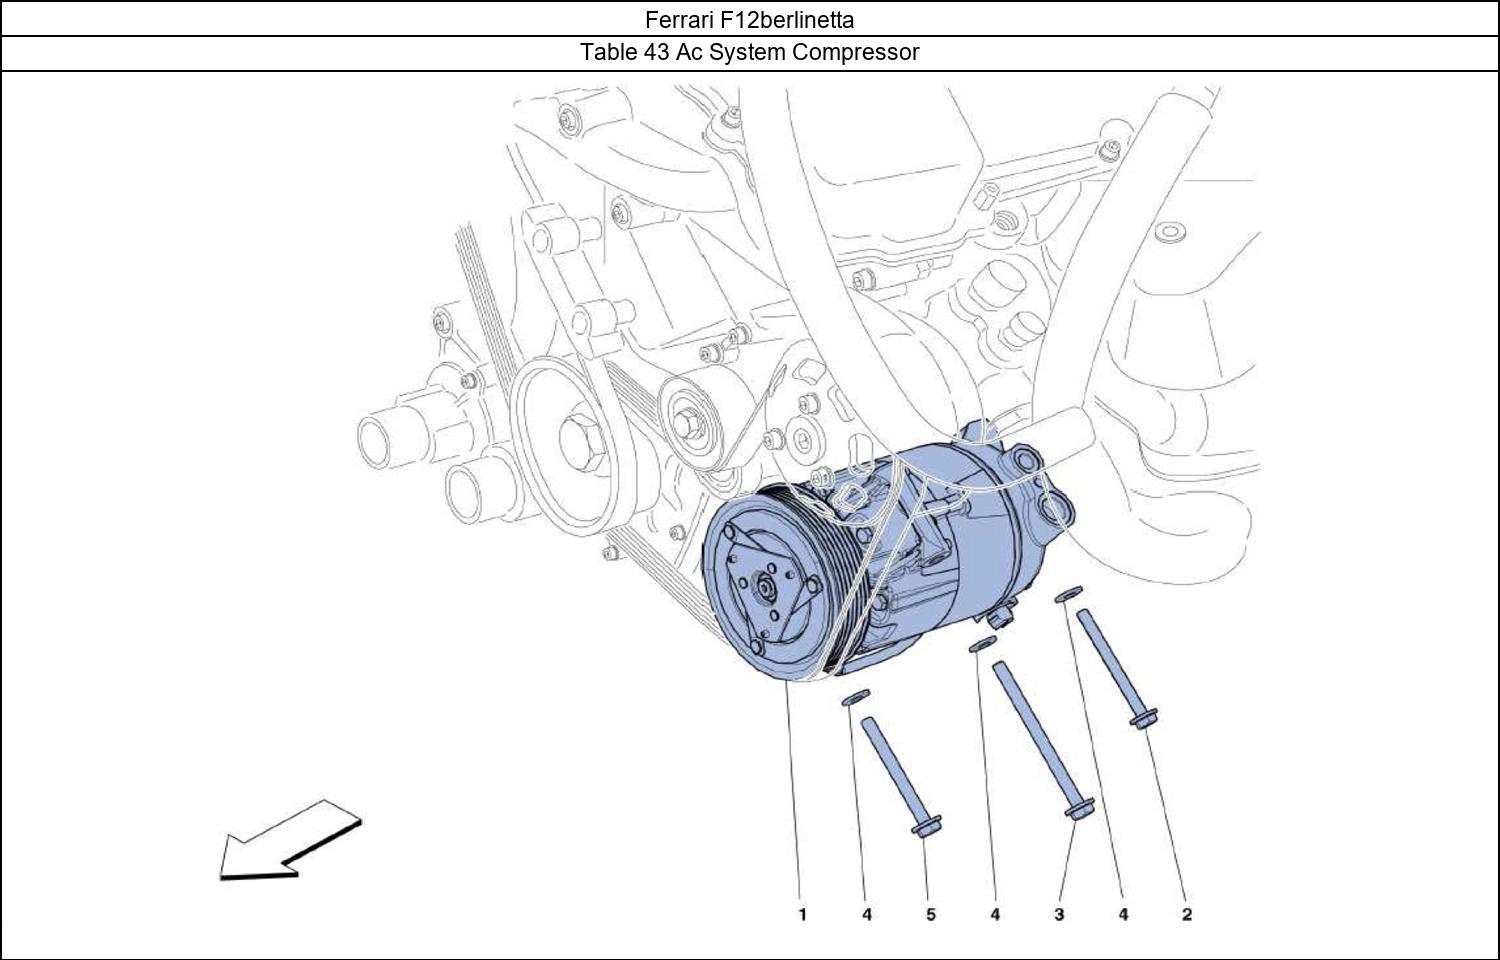 Ferrari Parts Ferrari F12berlinetta Table 43 Ac System Compressor